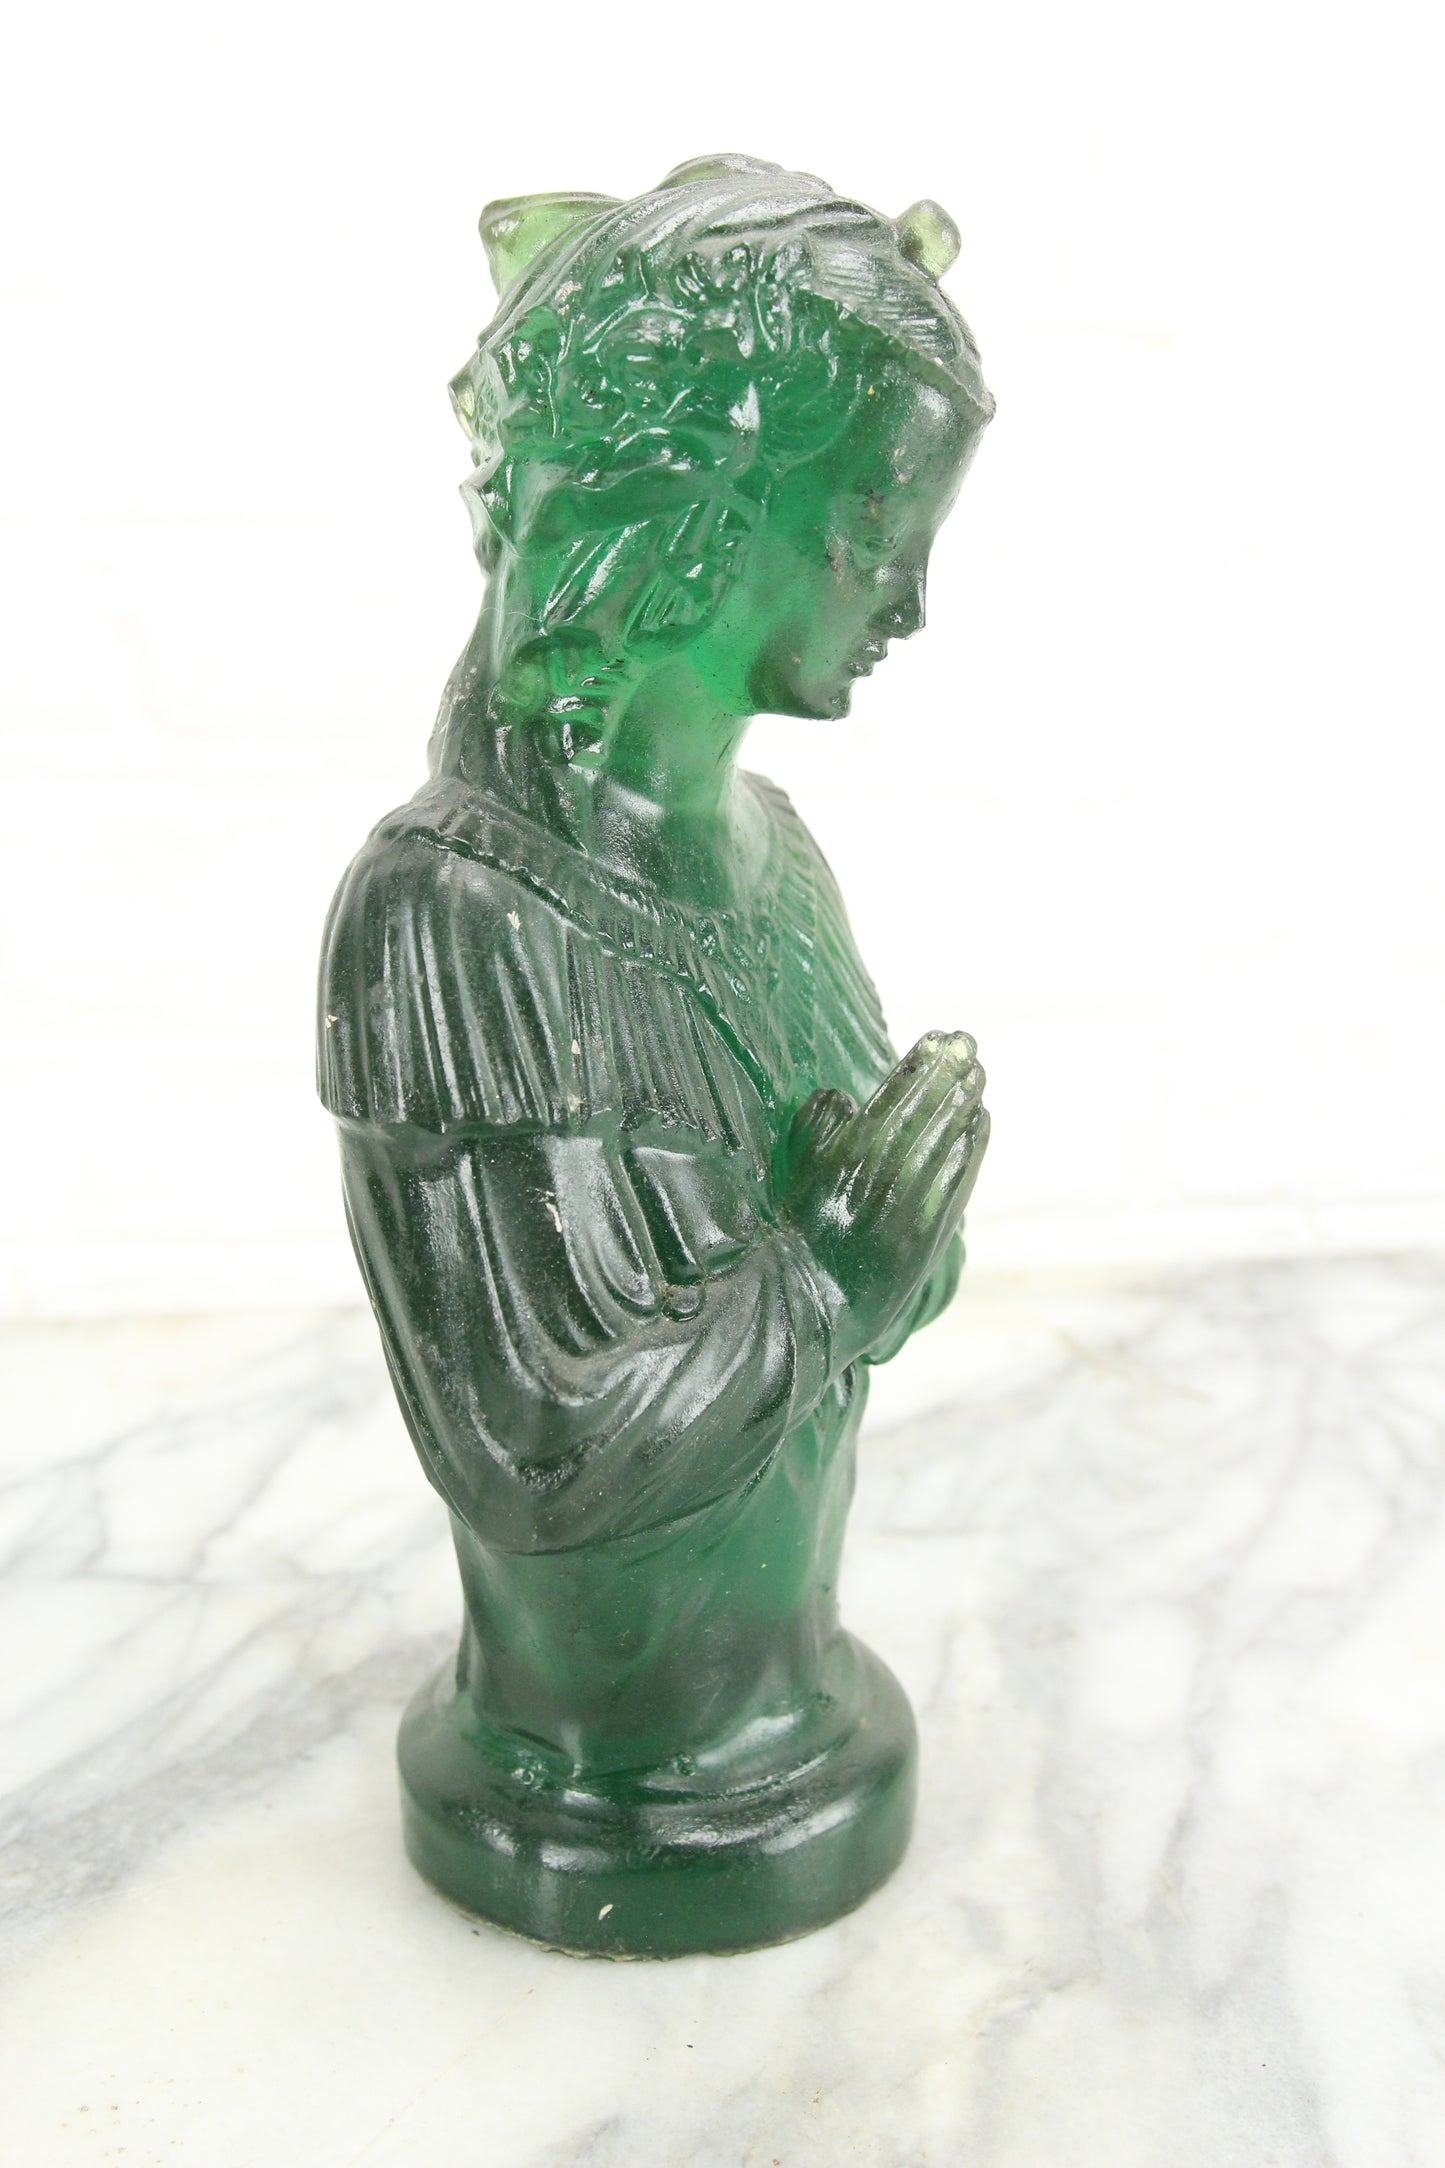 Translucent Green Resin Statue of a Praying Goddess